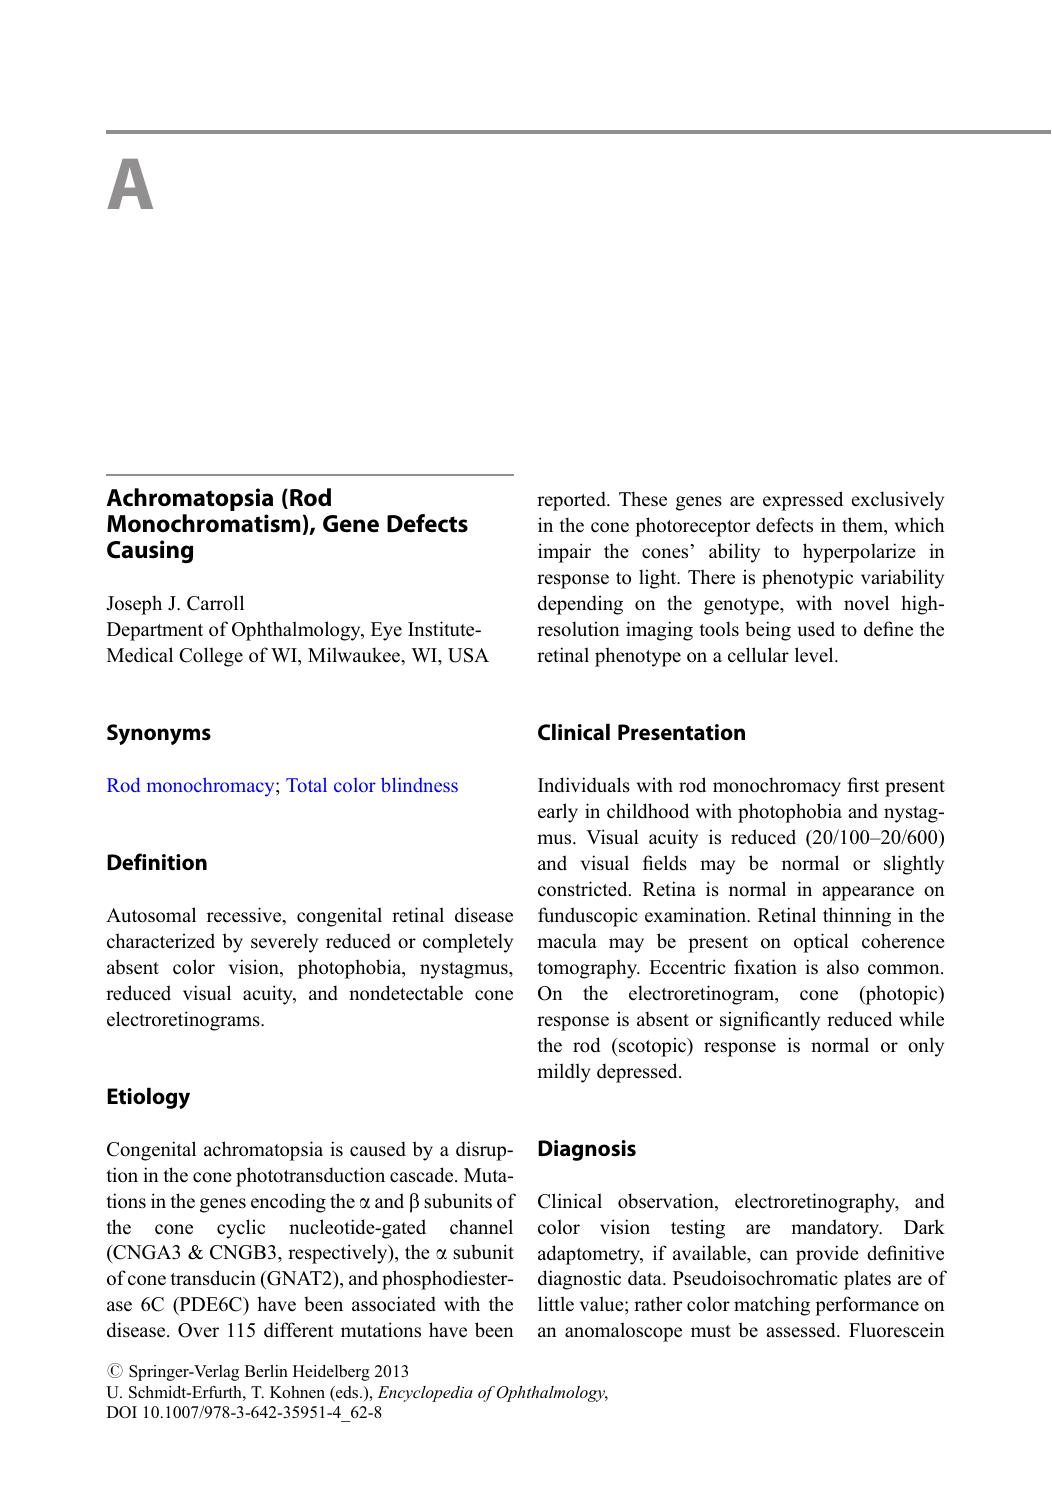 Encyclopedia of Ophthalmology 2013